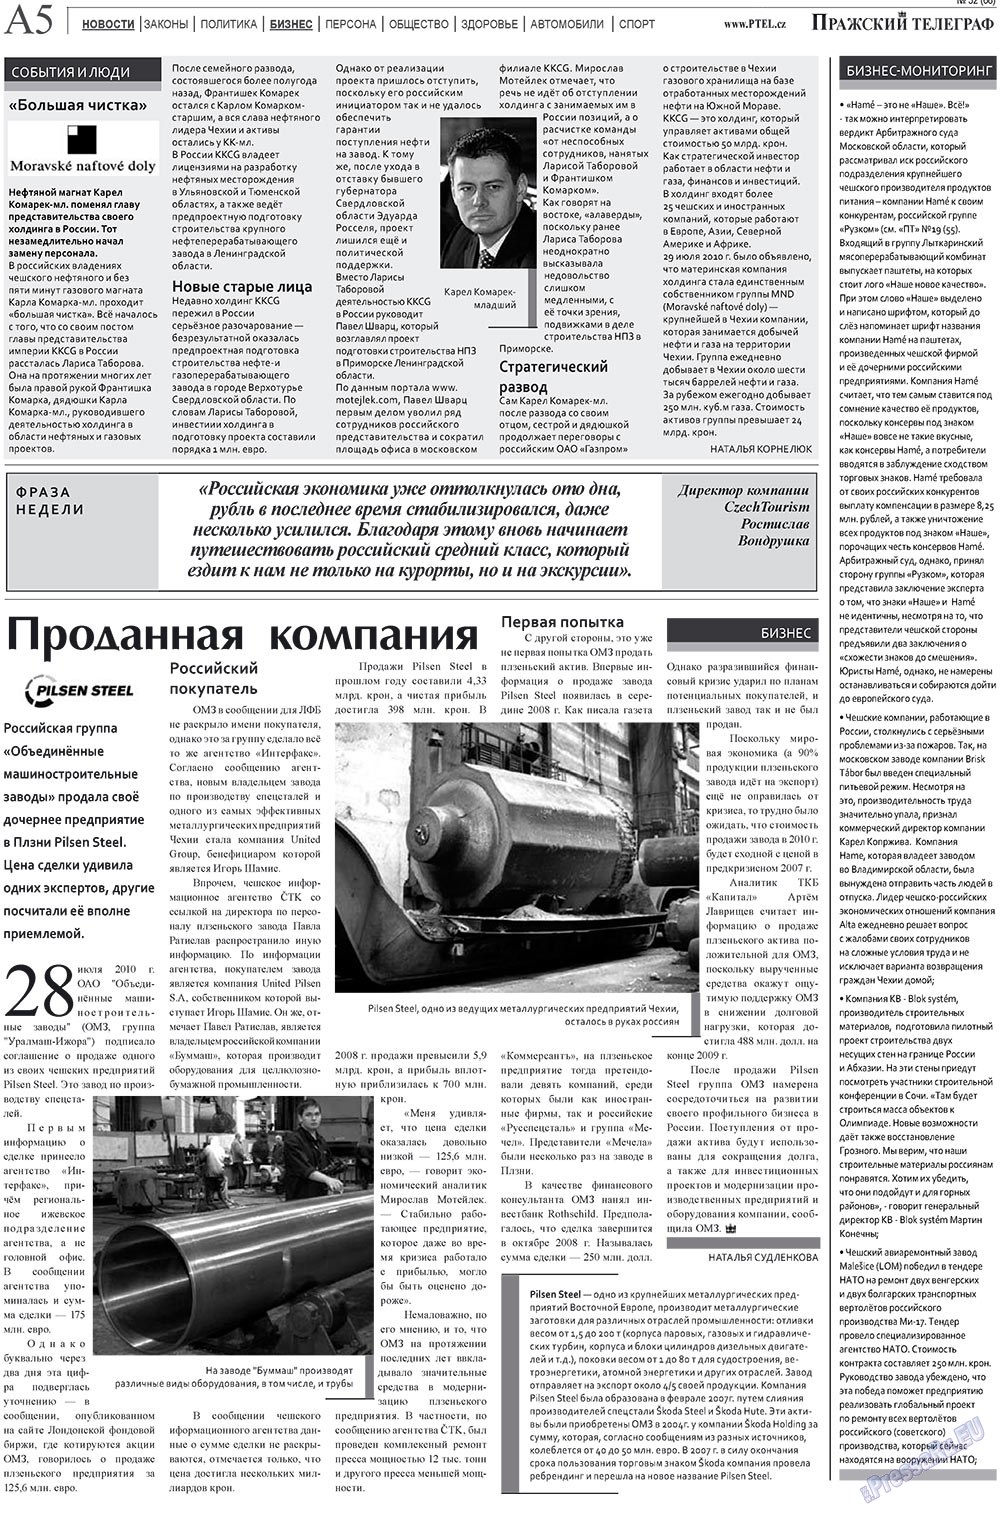 Пражский телеграф, газета. 2010 №32 стр.5